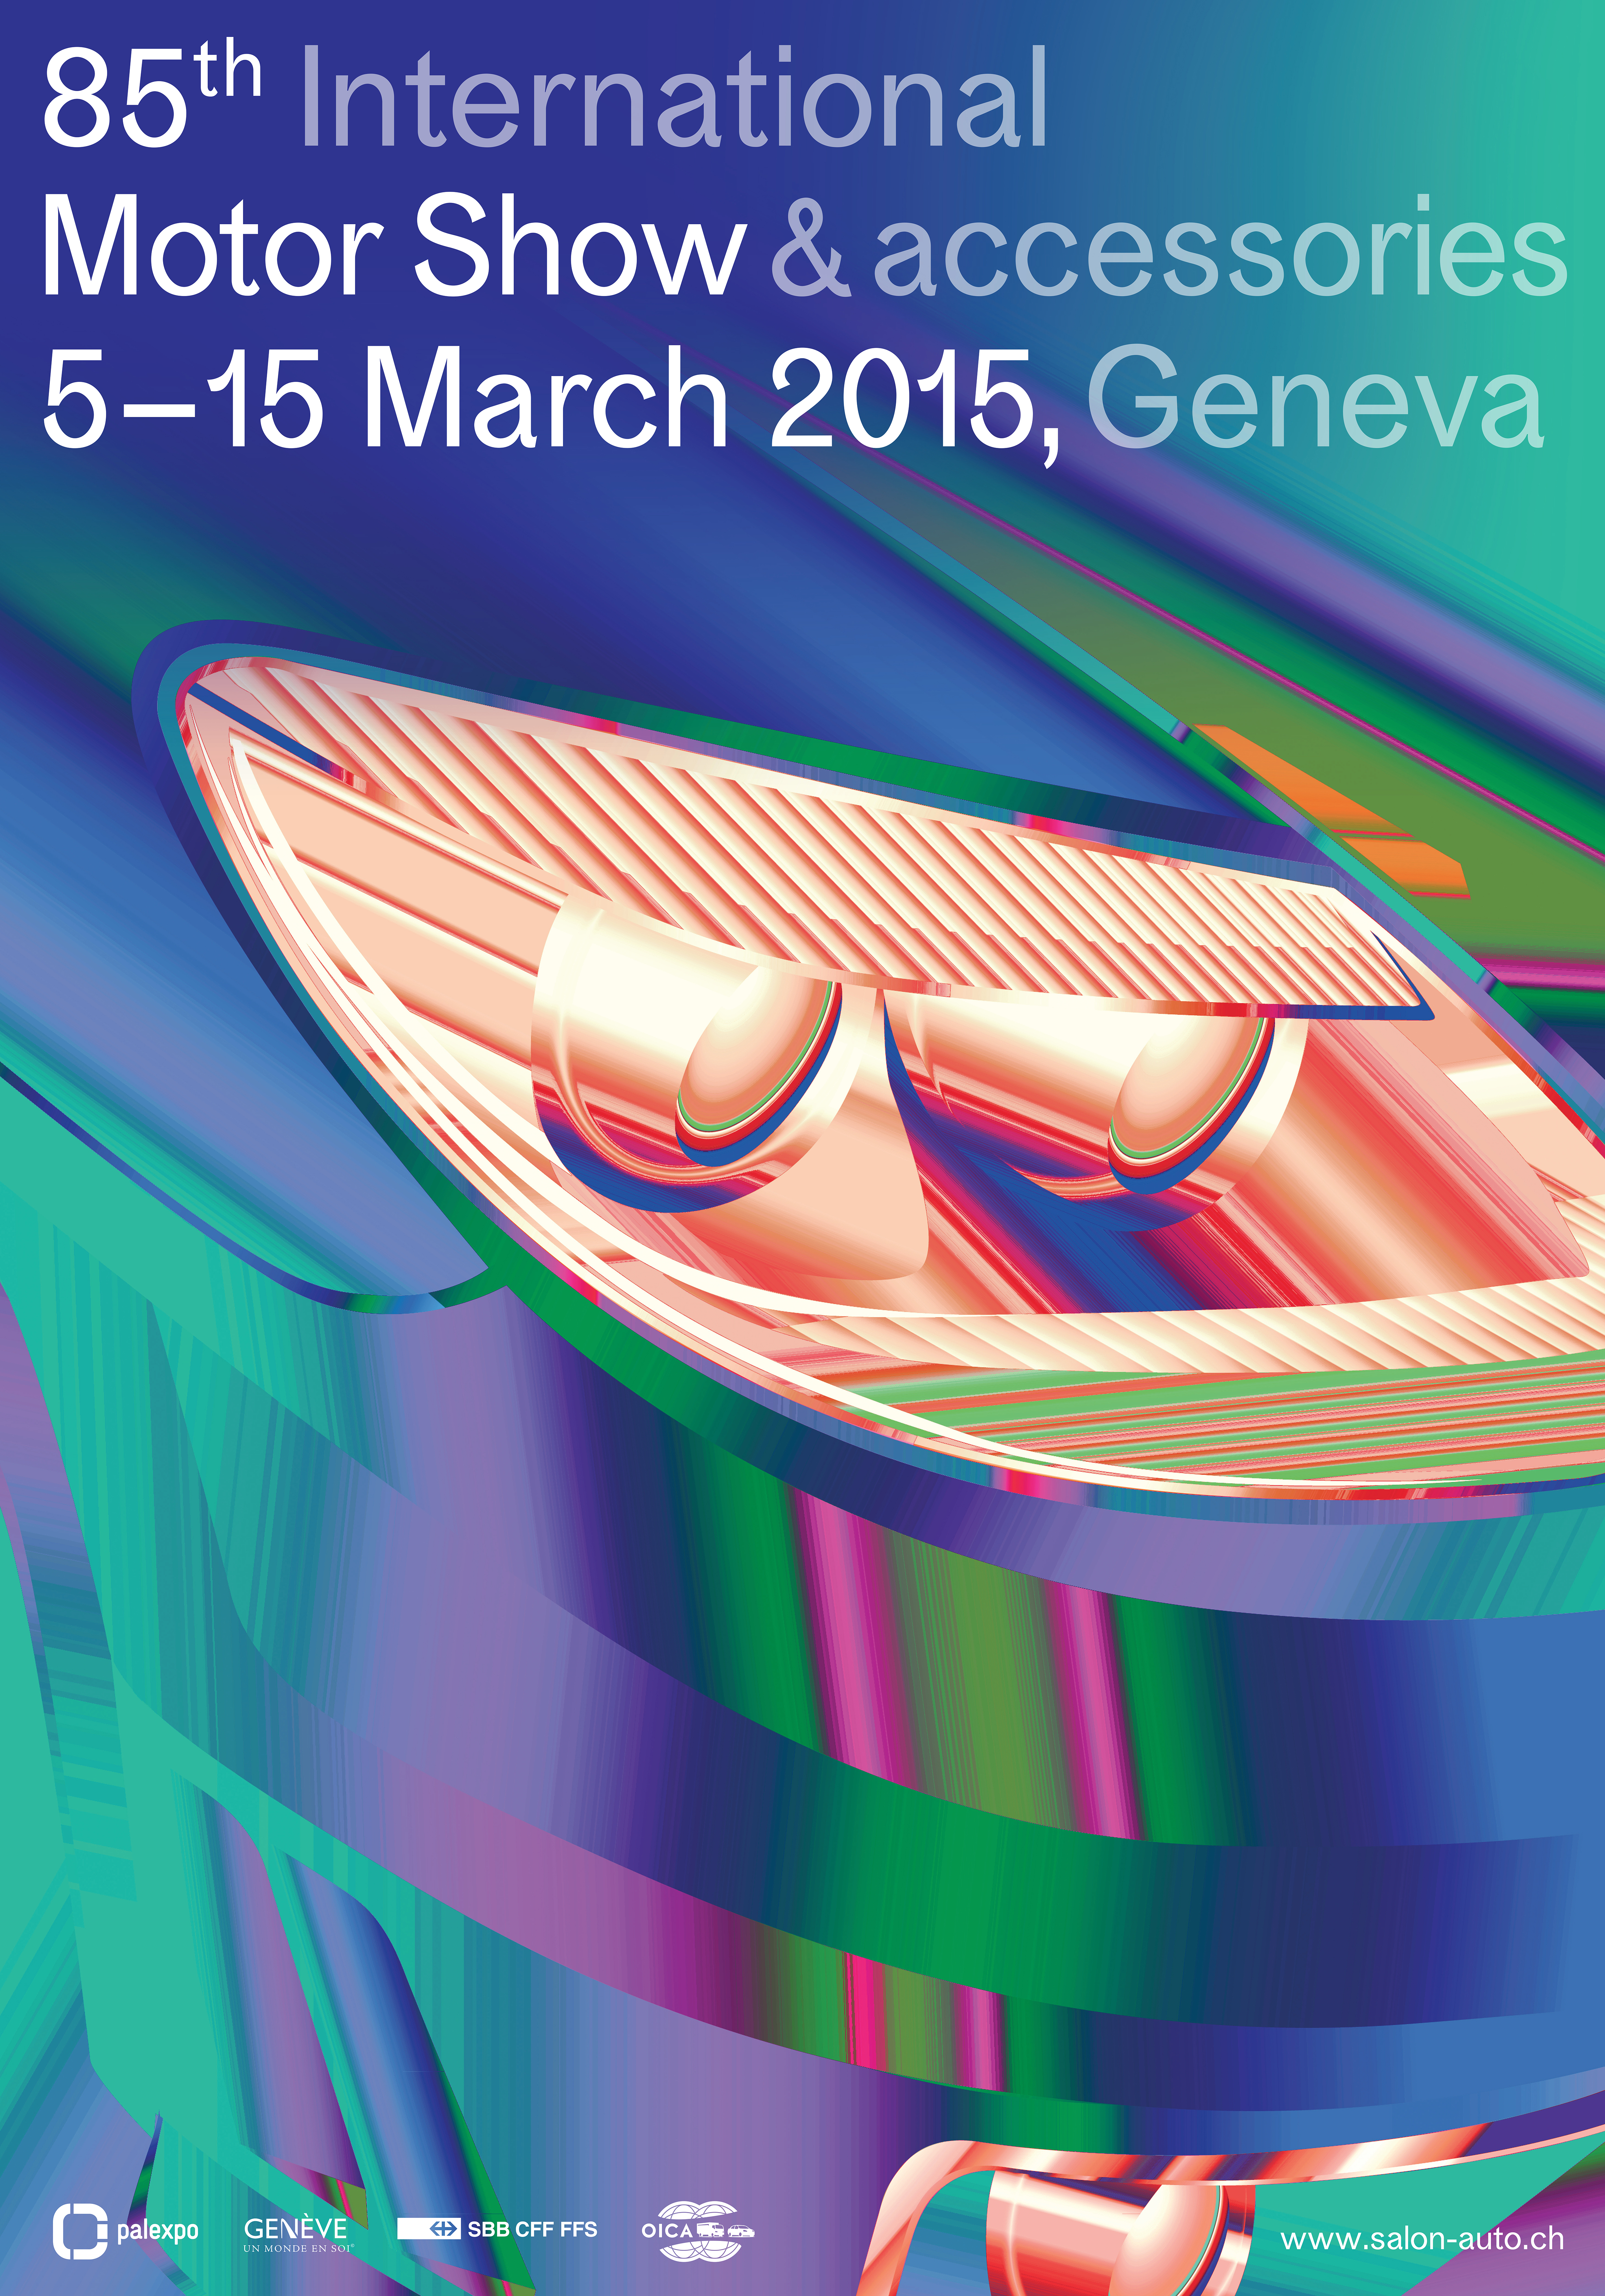 Geneva Motor Show unveils 2015 poster